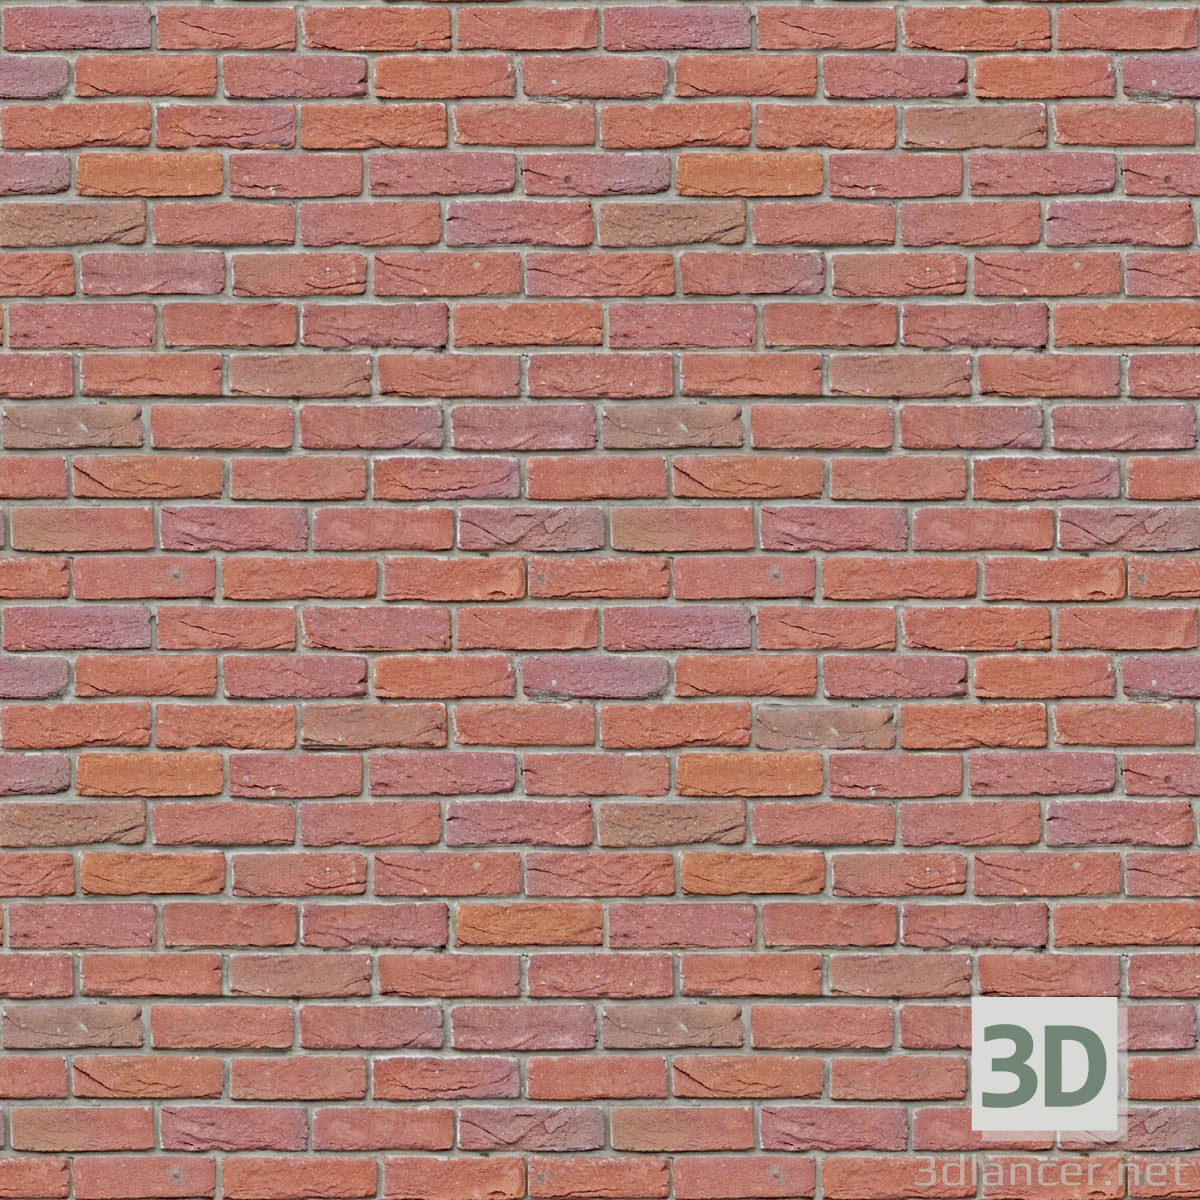 Texture brickwork 005 free download - image